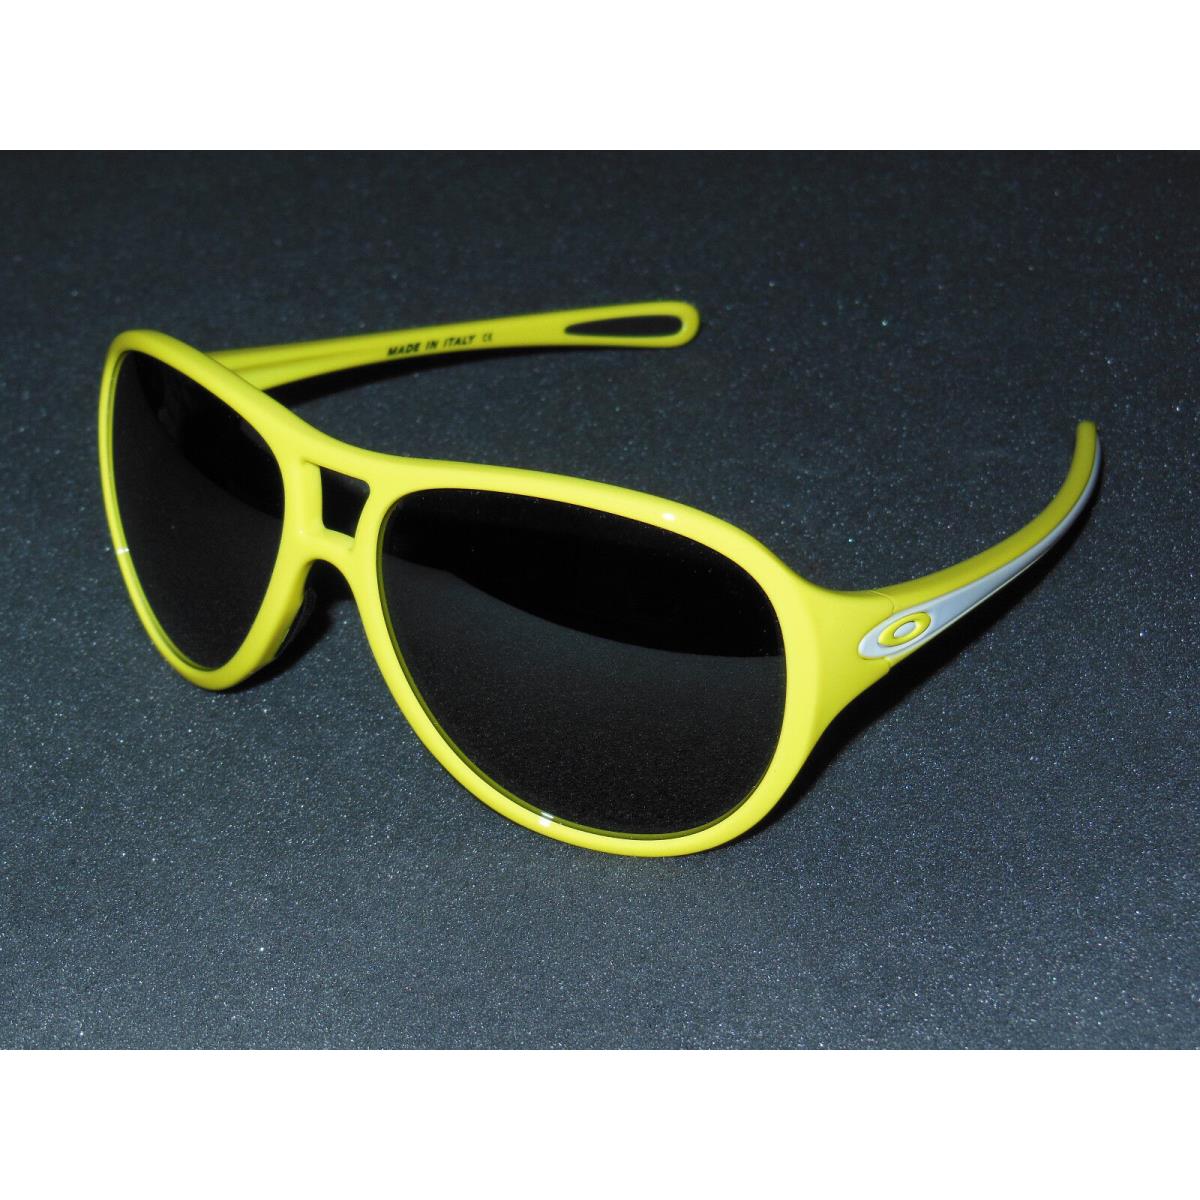 Oakley Twentysix 2 Sunglasses Sunflower/black Iridium 26 Twenty Six Yellow